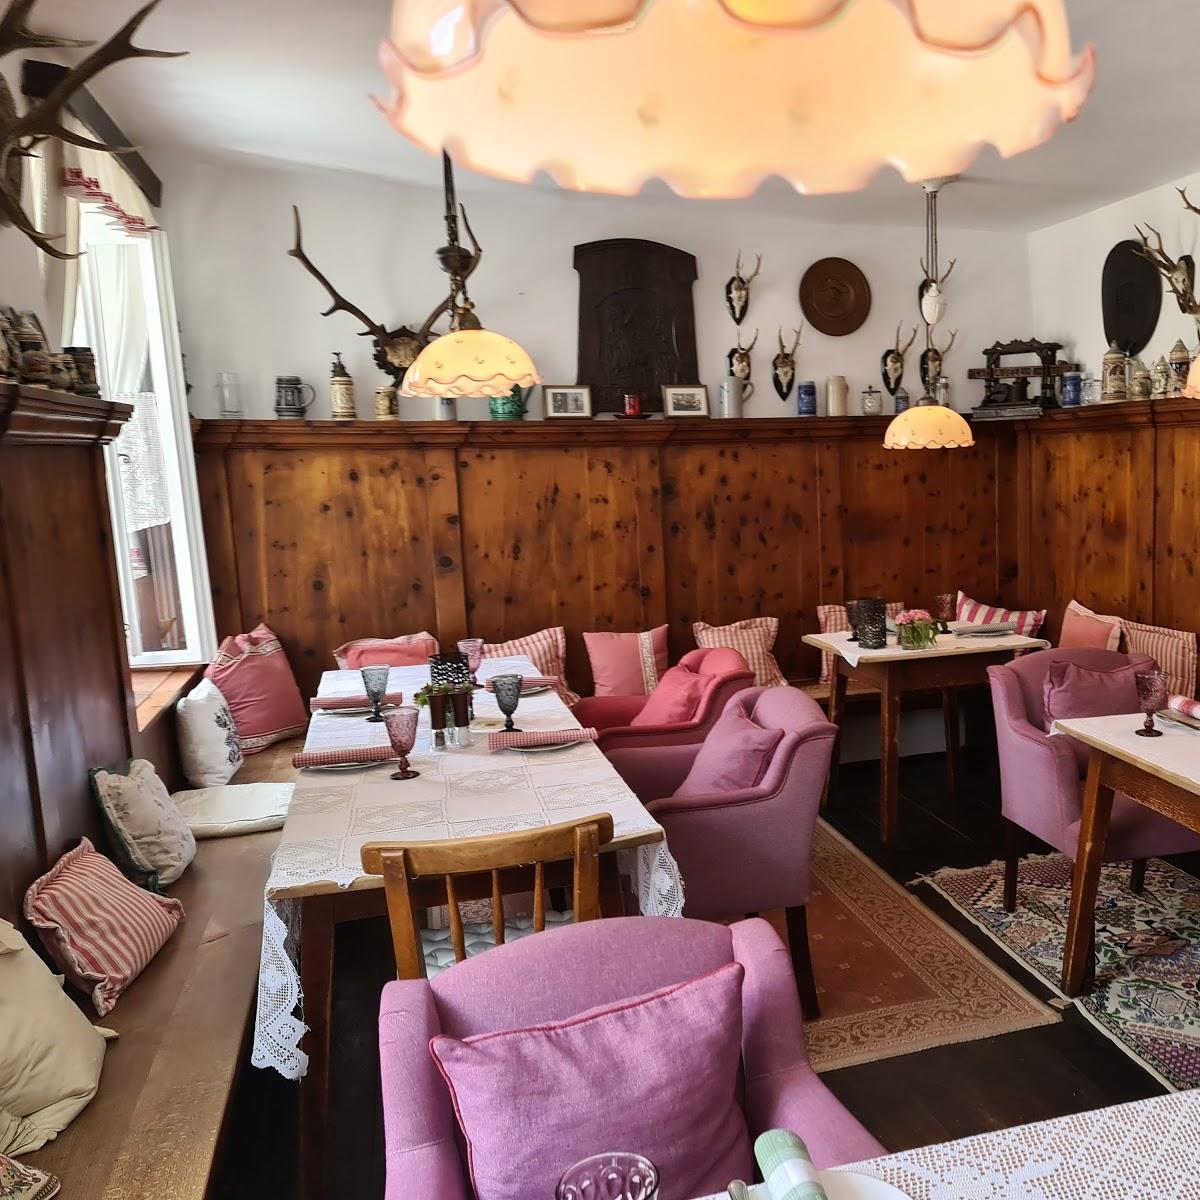 Restaurant "Gasthaus Jell" in Krems an der Donau